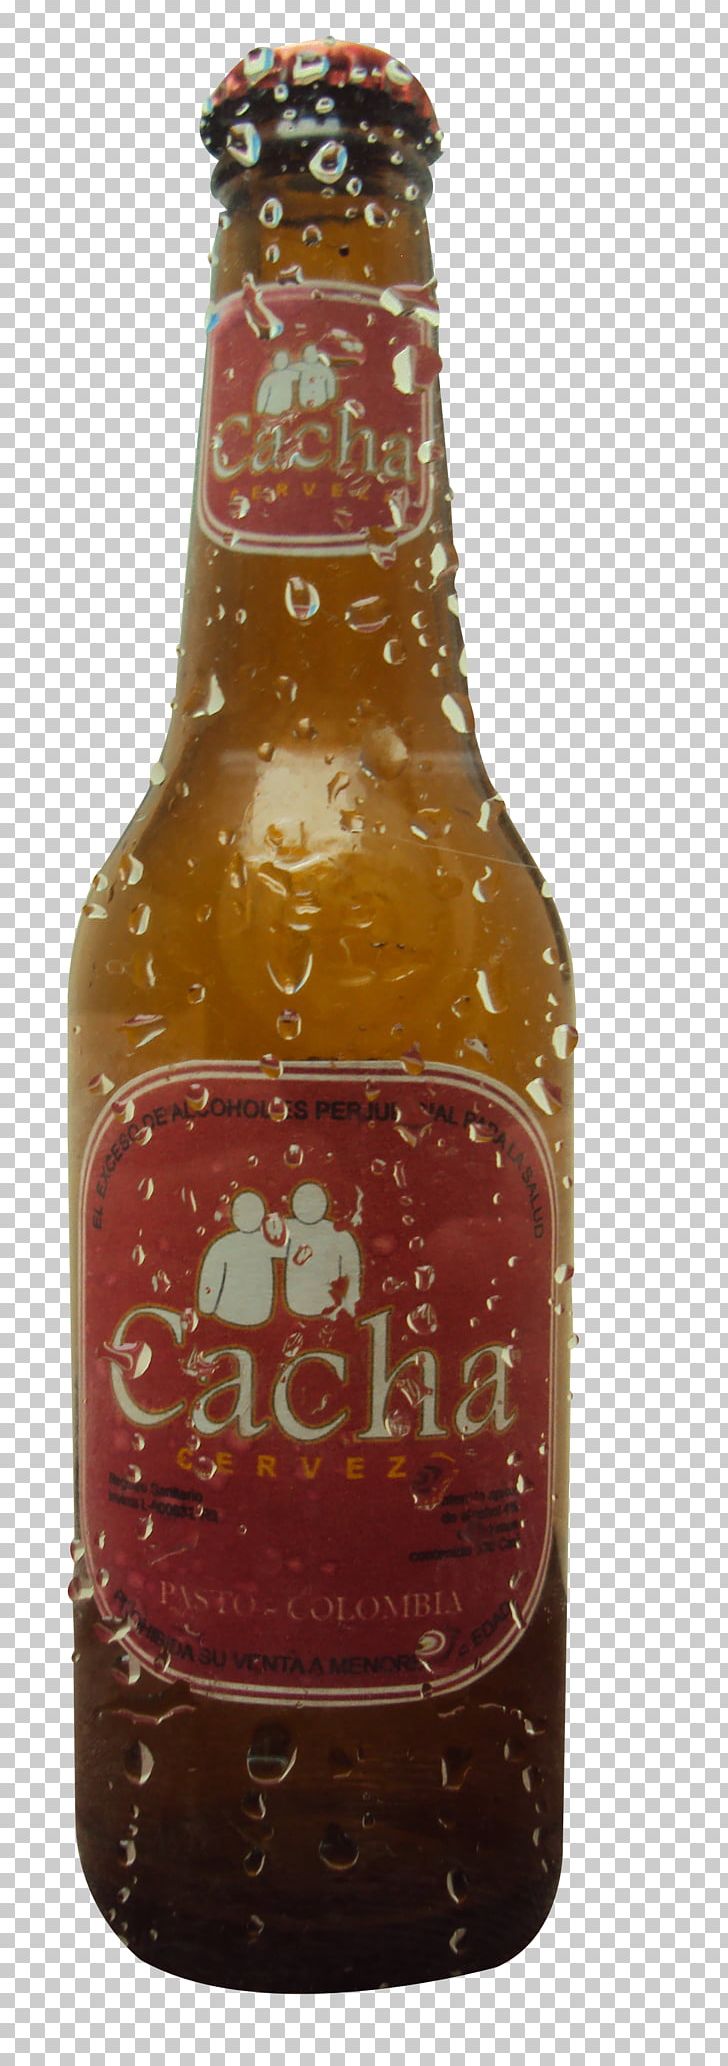 Ale Beer Bottle Glass Bottle PNG, Clipart, Ale, Beer, Beer Bottle, Bottle, Cachaccedila Free PNG Download